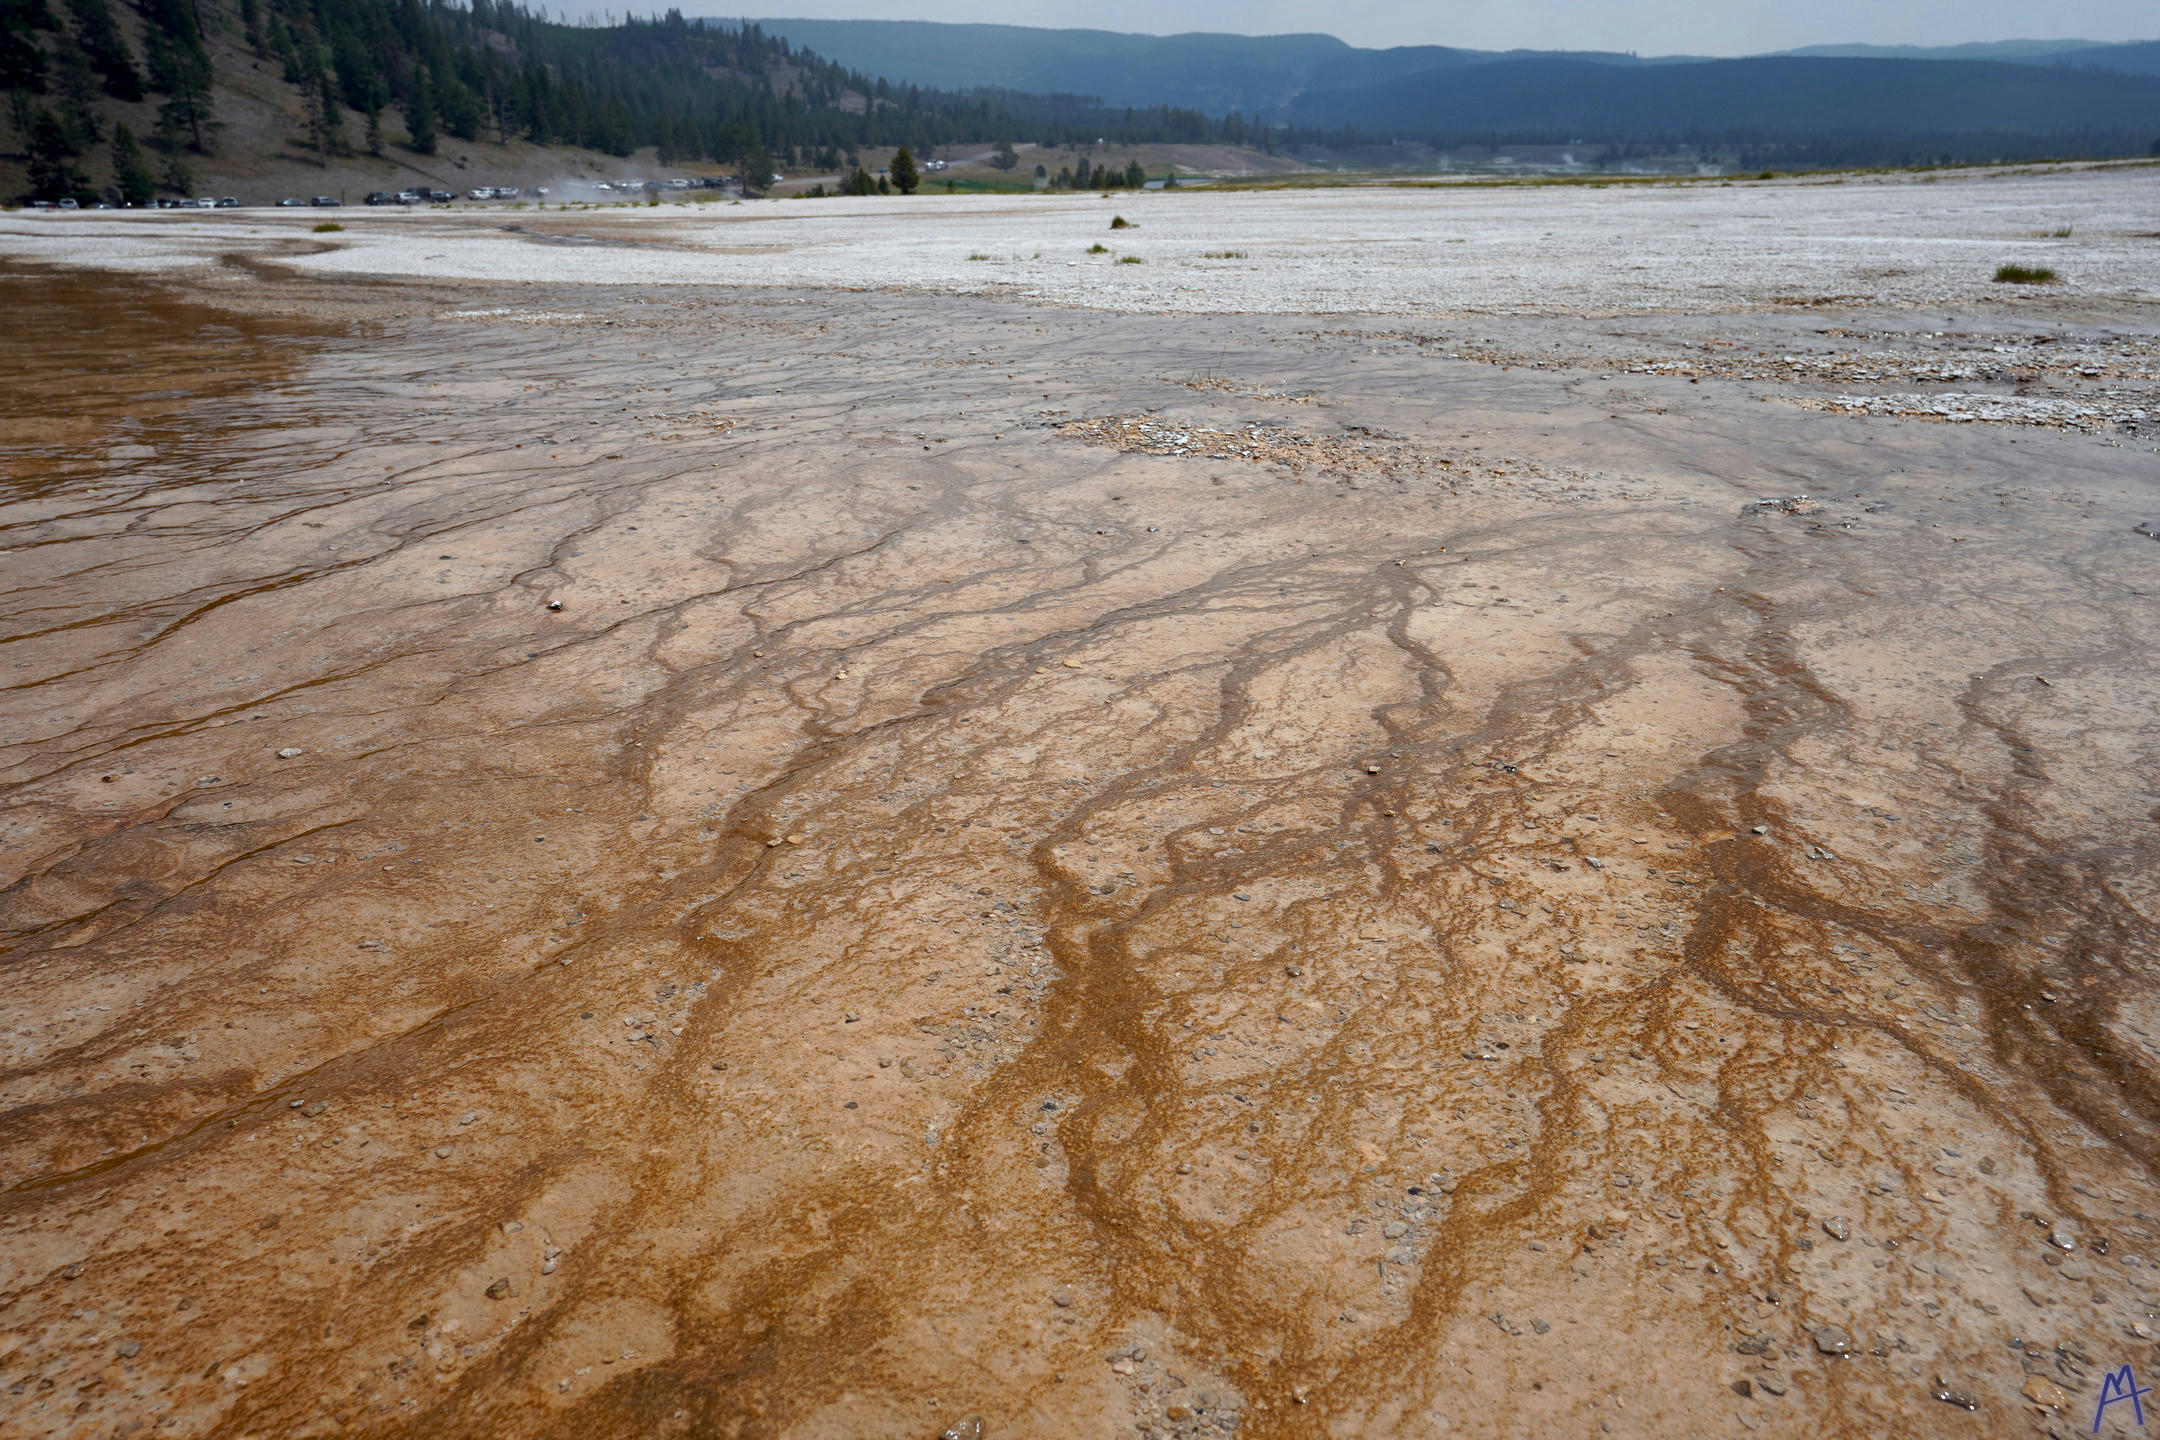 Veins of orange hot spring runoff at Yellowstone